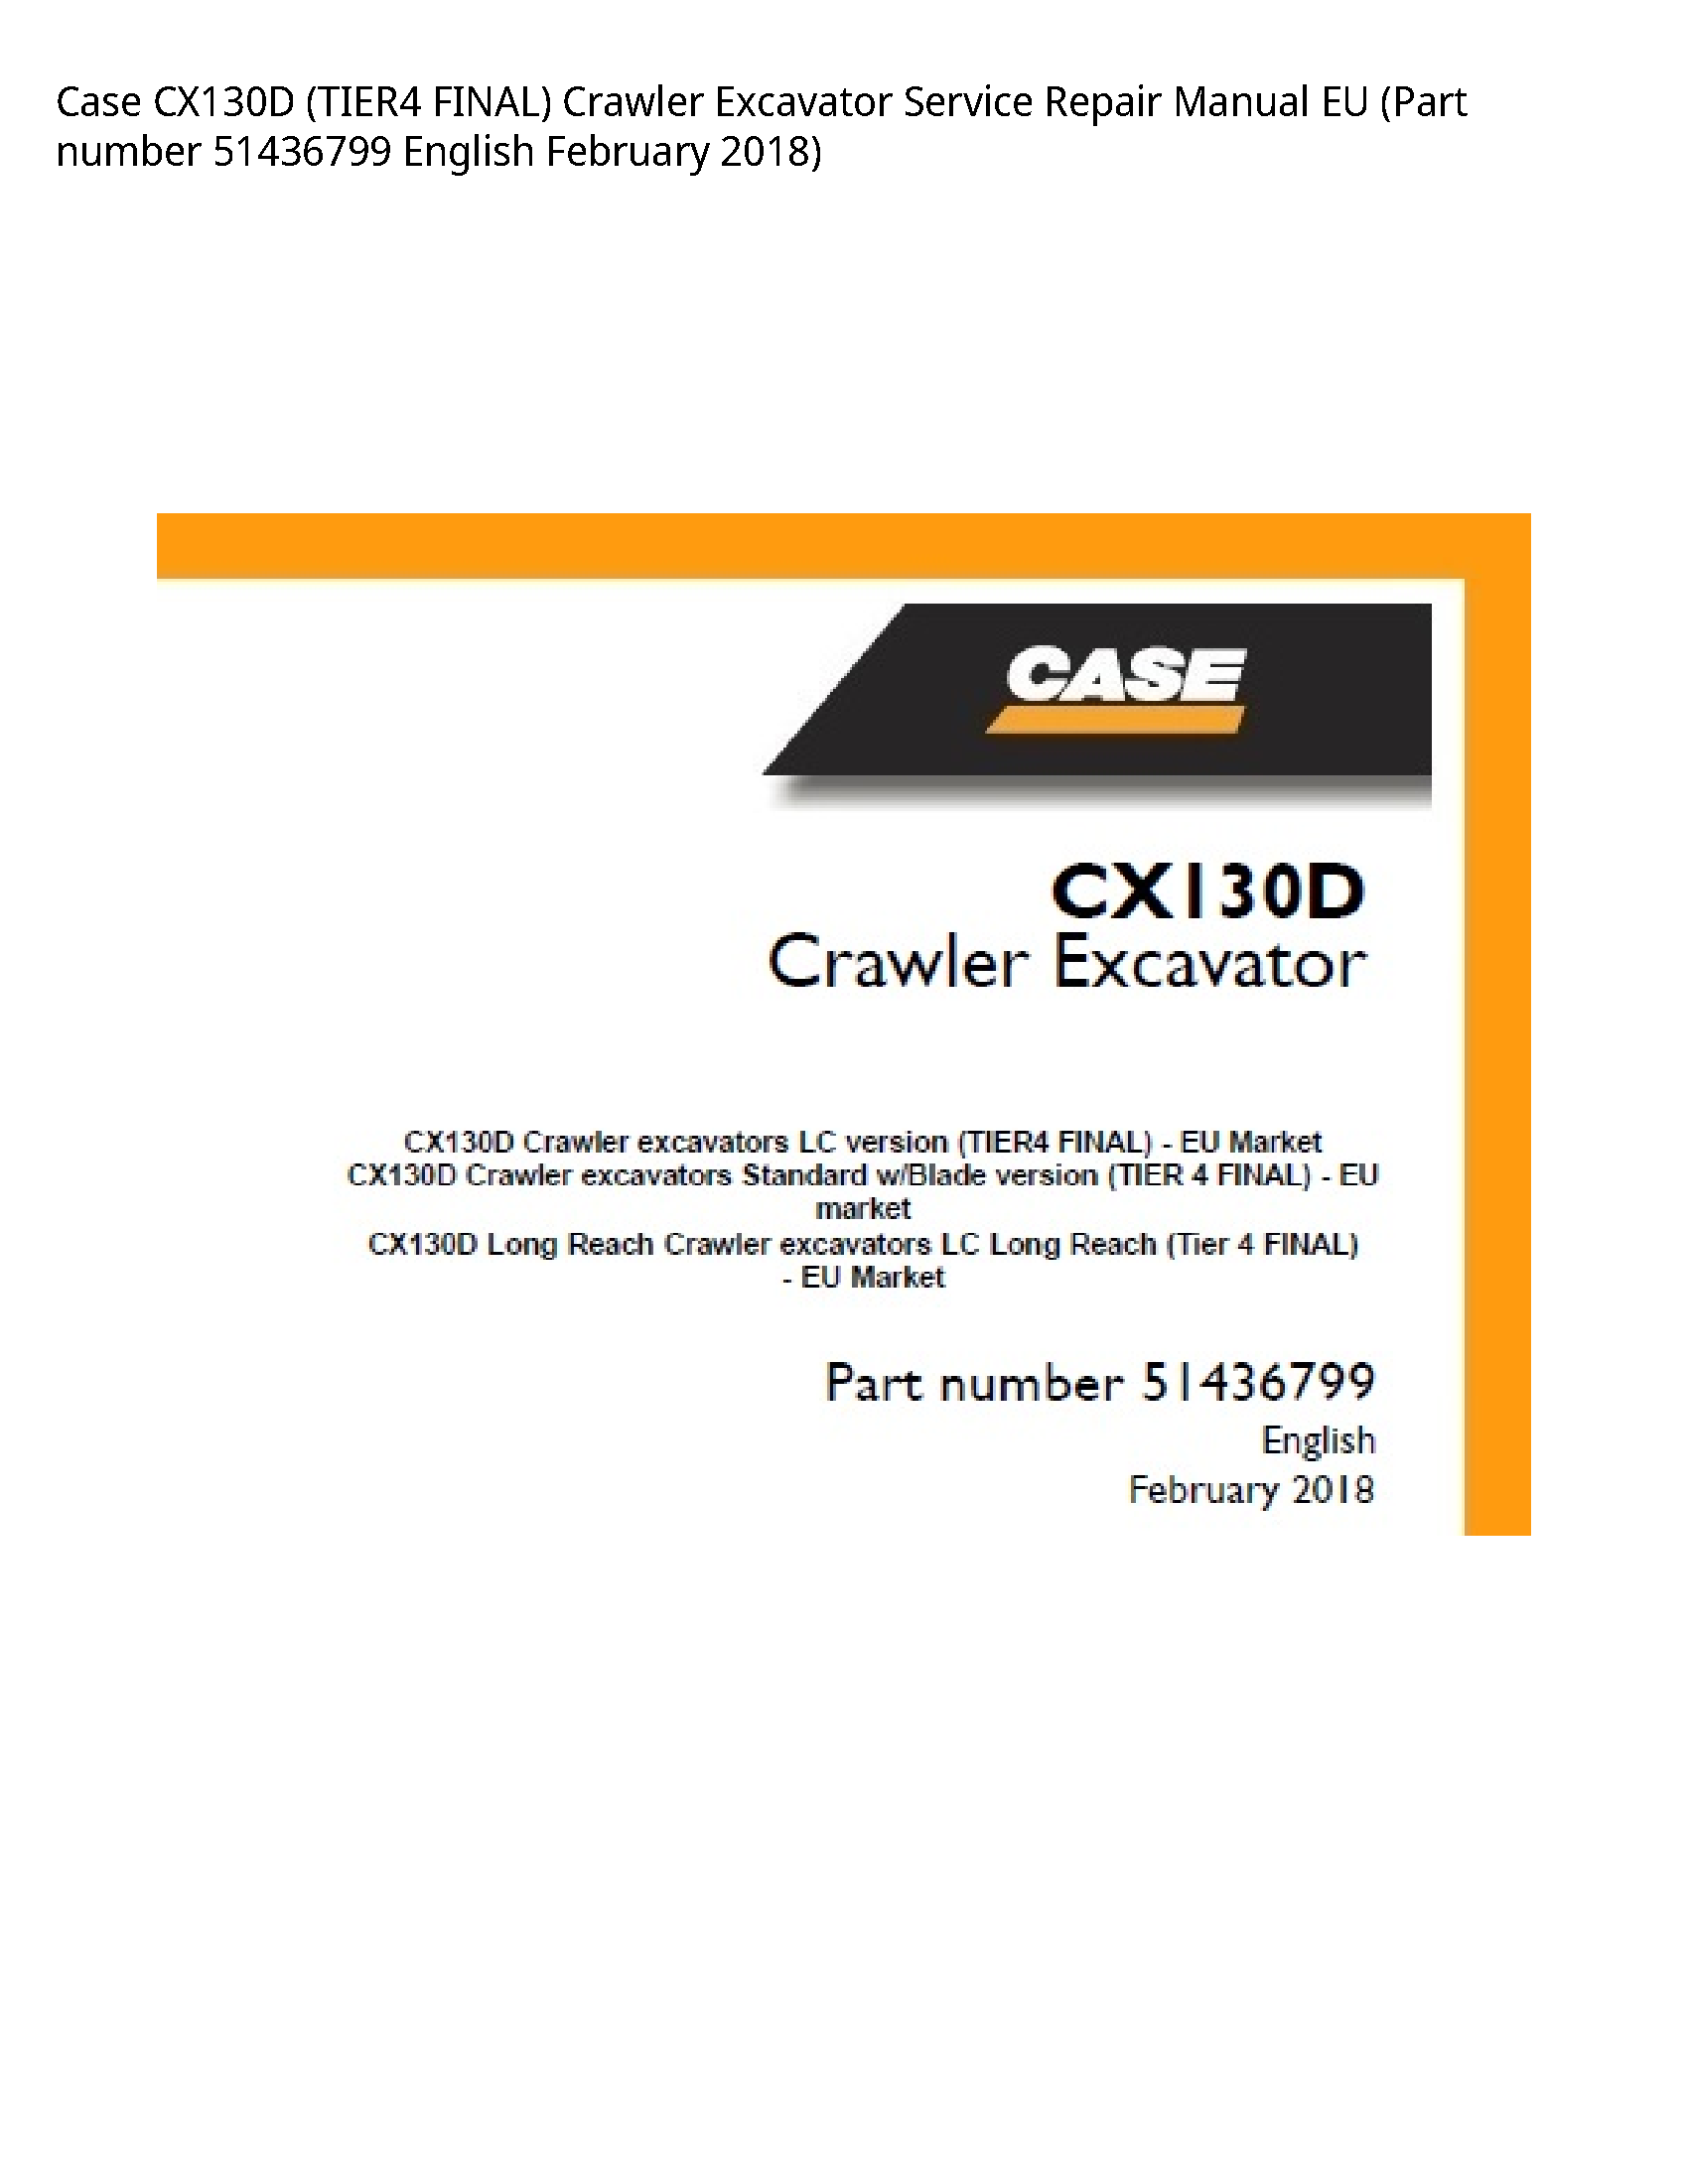 Case/Case IH CX130D FINAL) Crawler Excavator manual